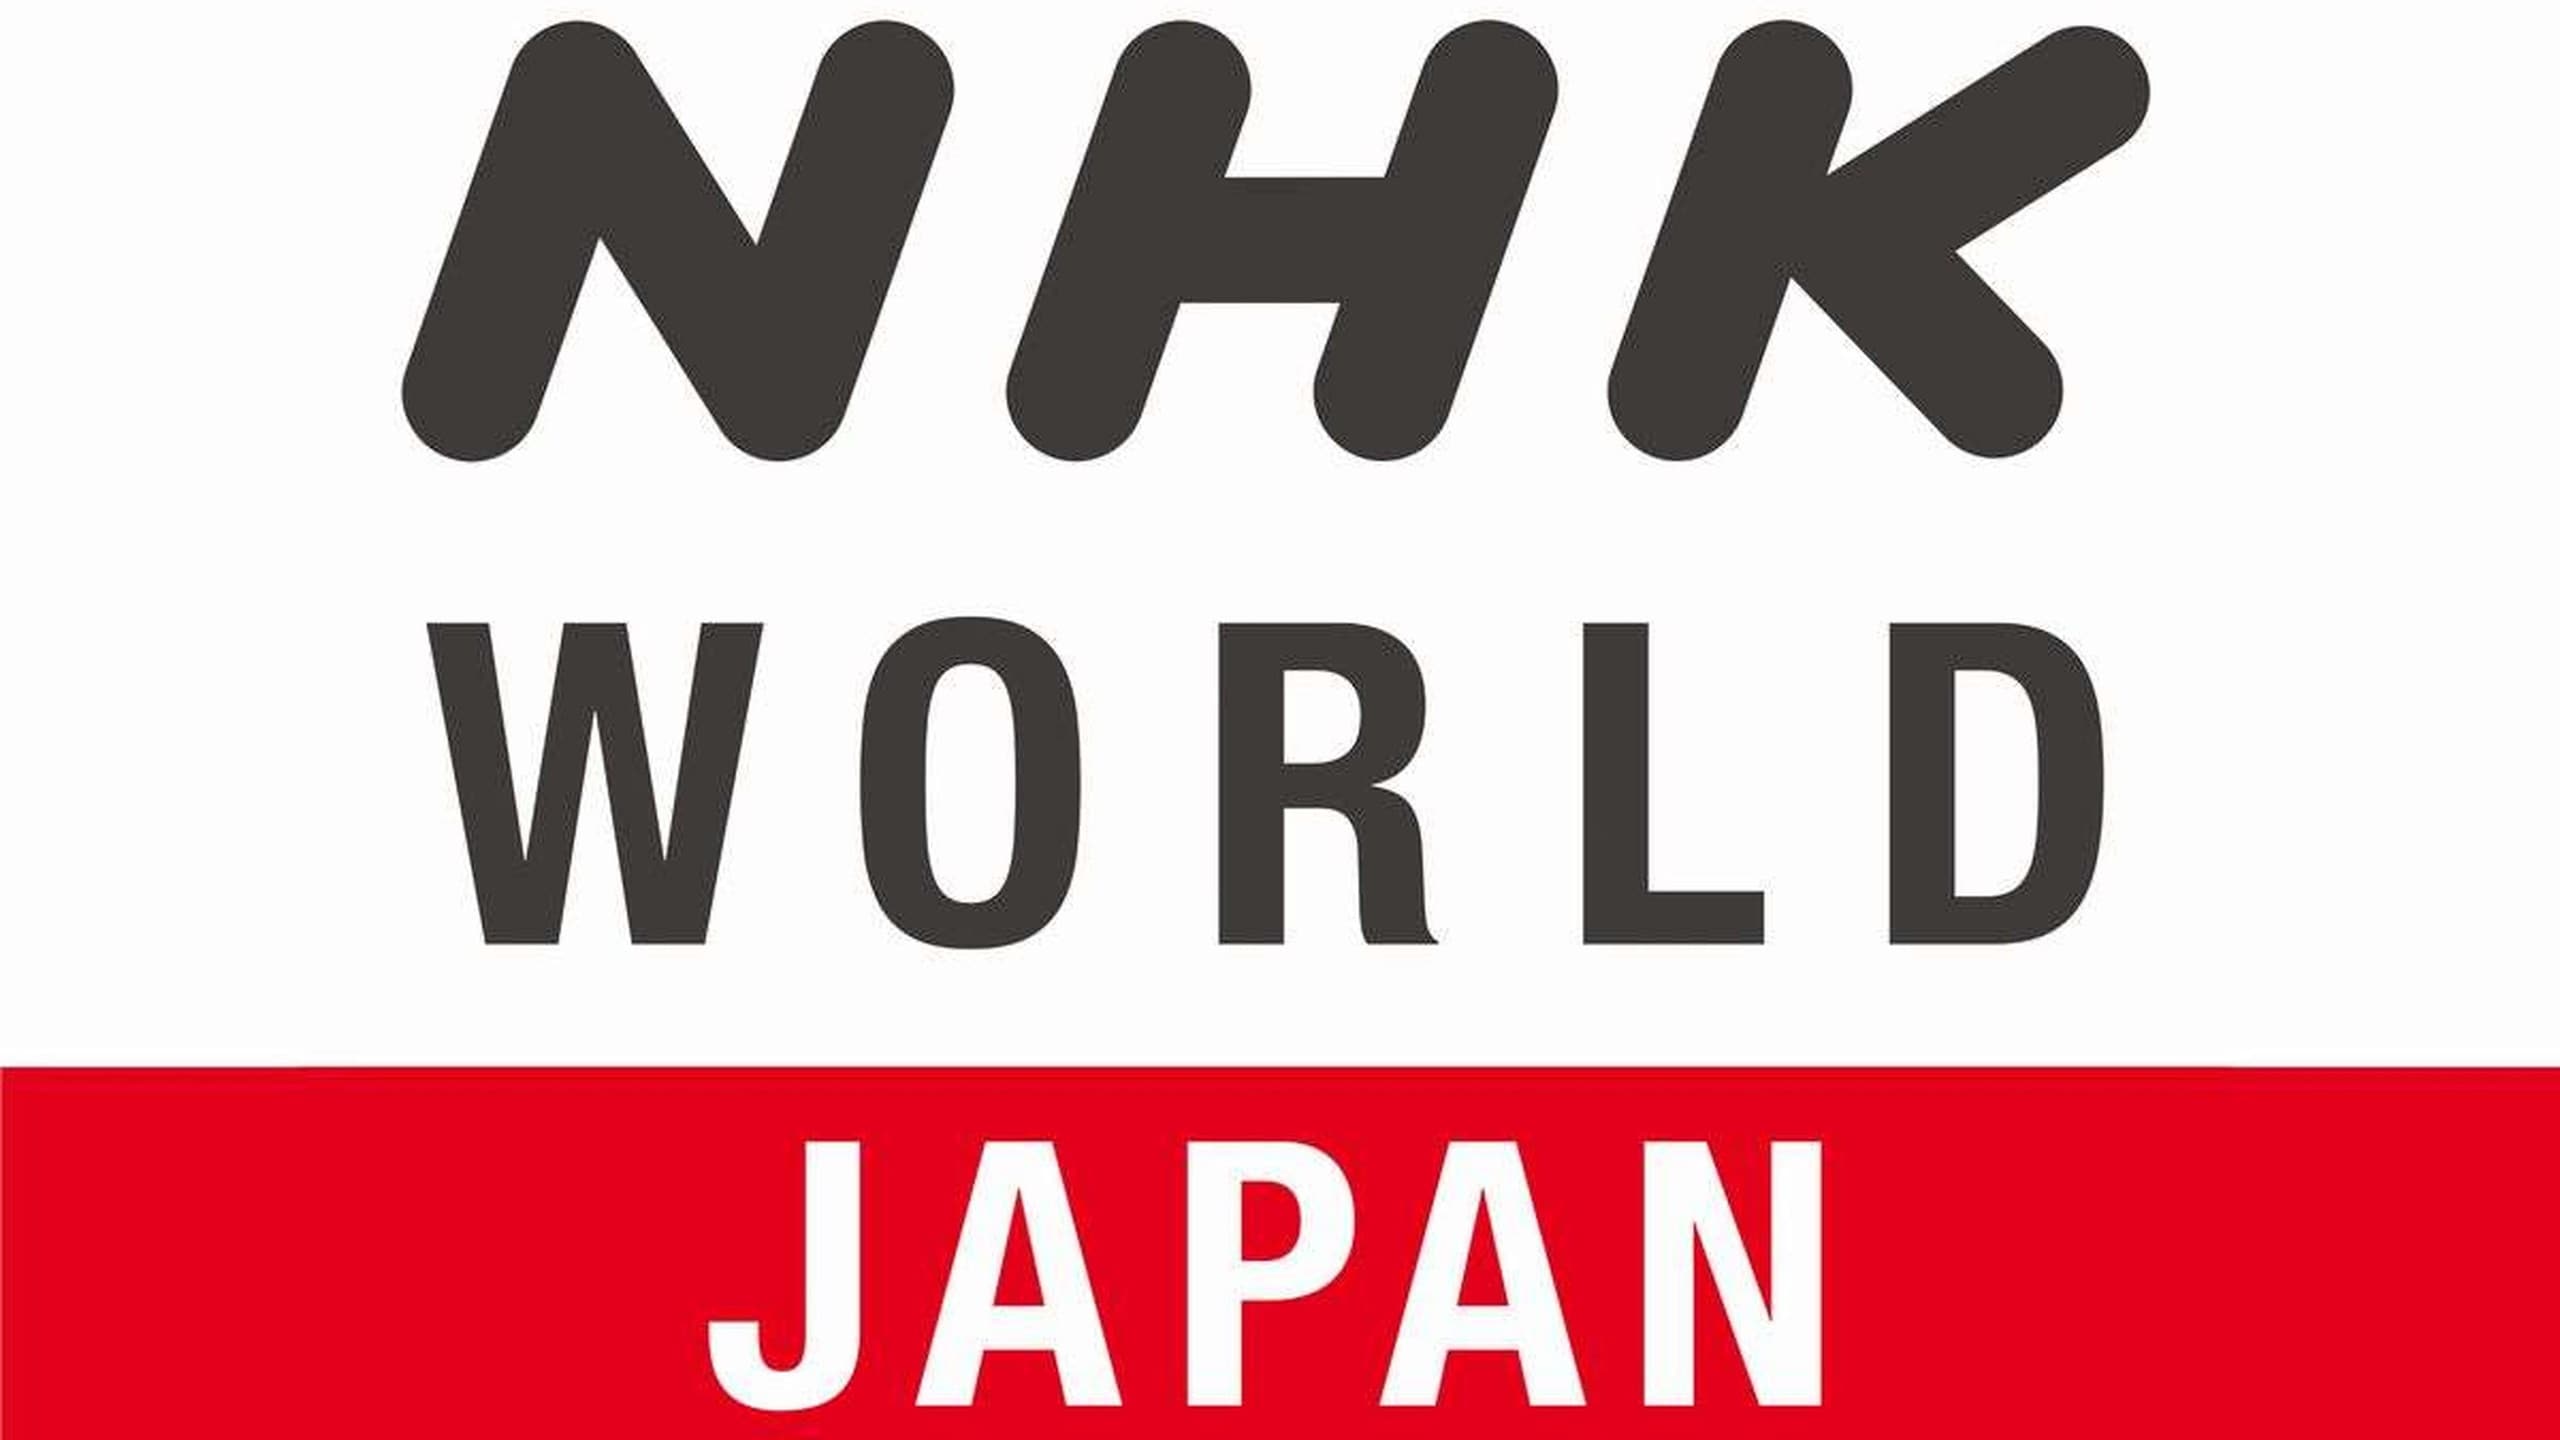 NHK World Japan free broadcast